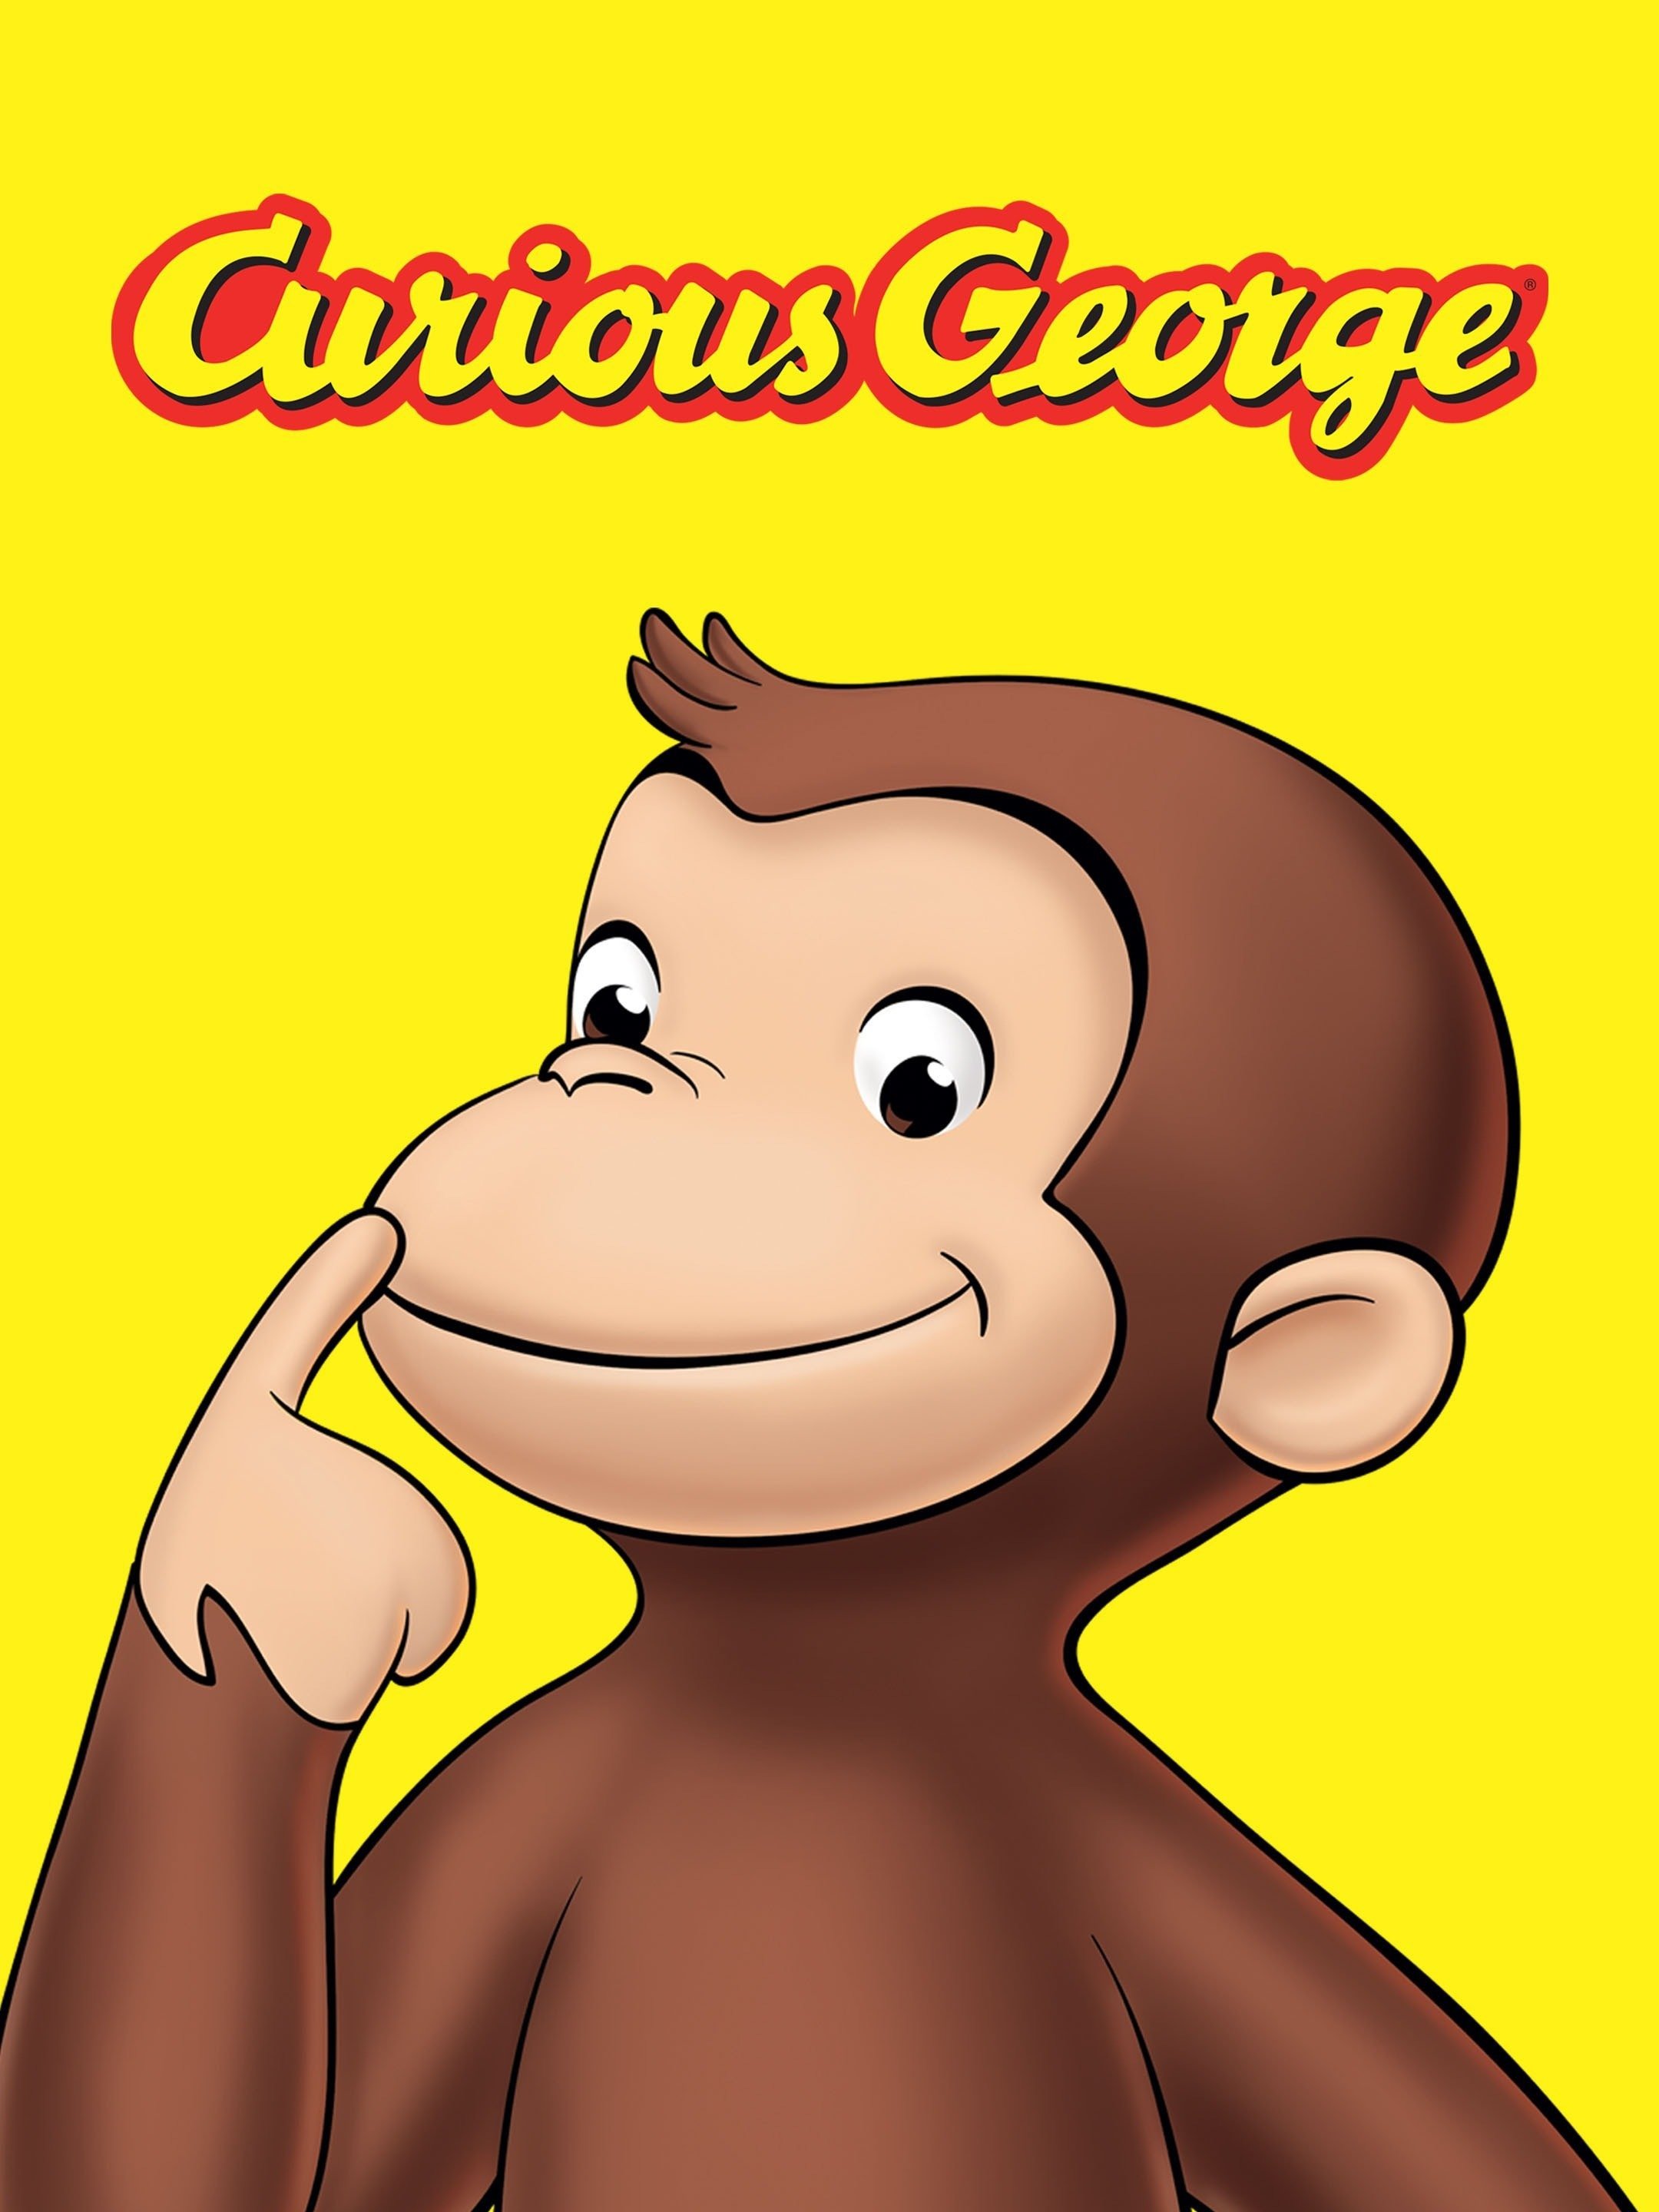 Bi curious. Любопытный Джордж. ВК curious George. Curious George Ether. Curious George php.